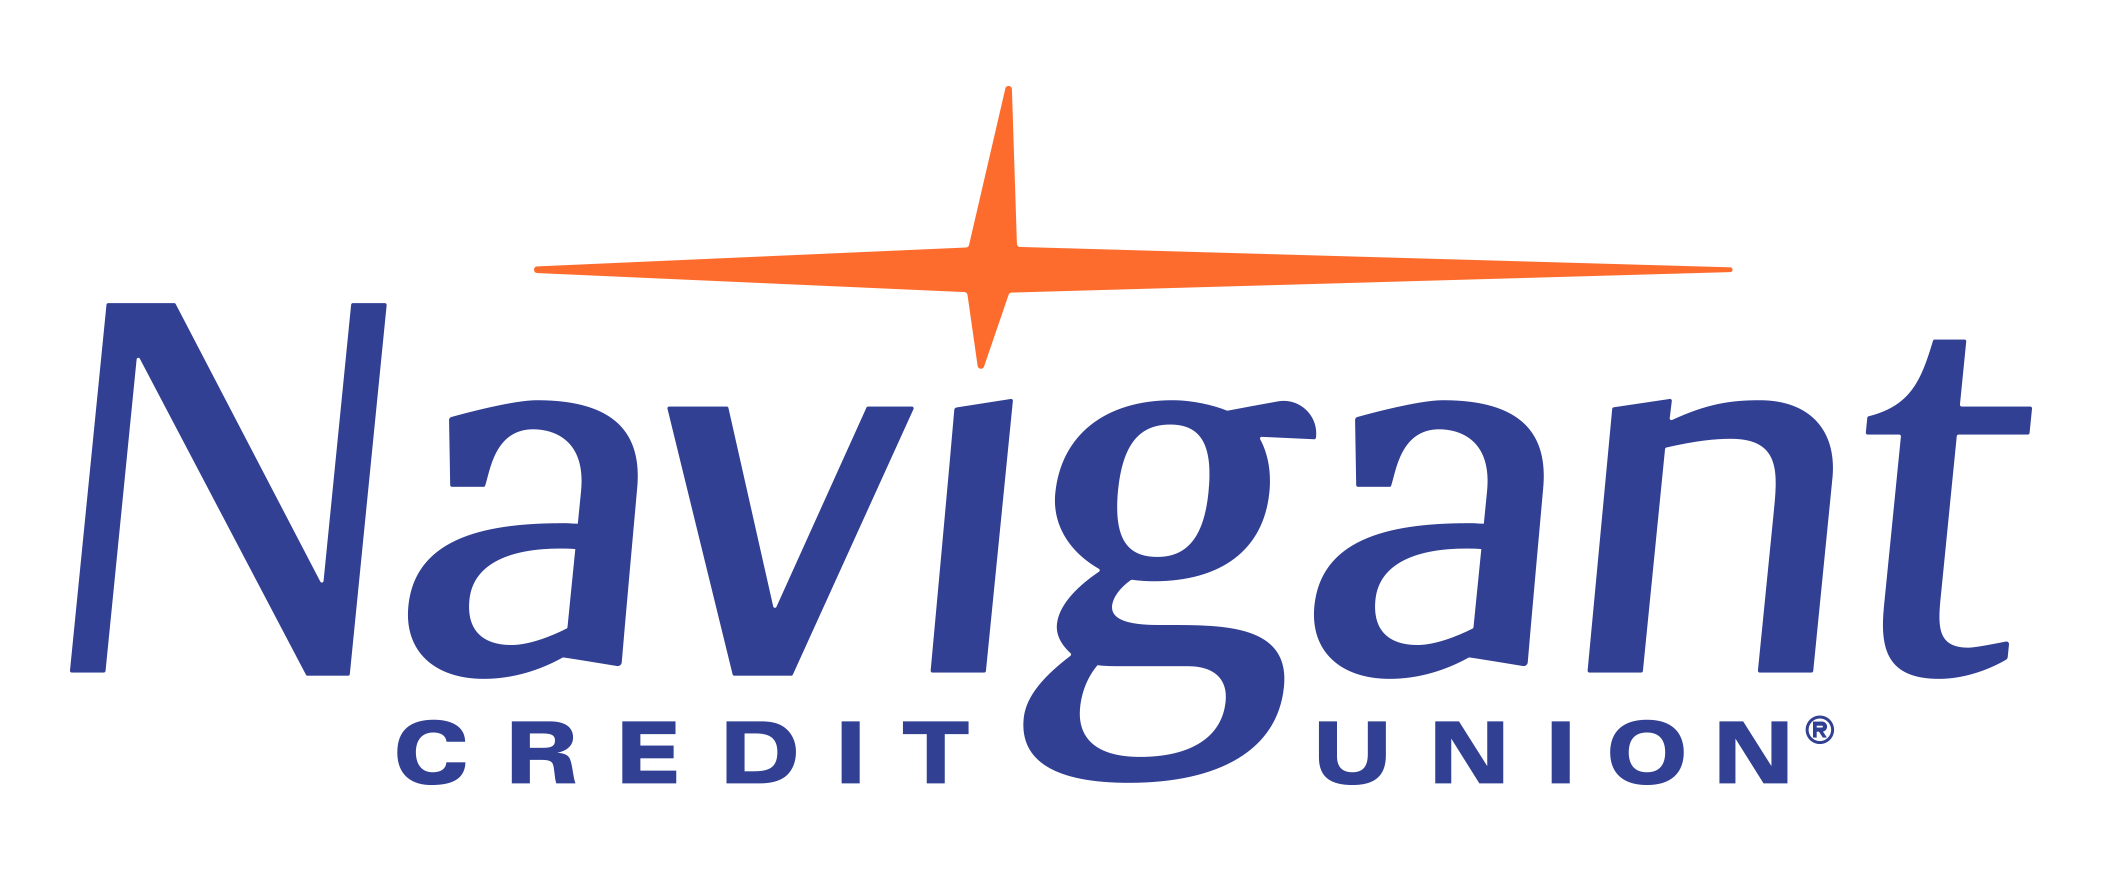 Navigant Credit Union-logo_blue-orange-300